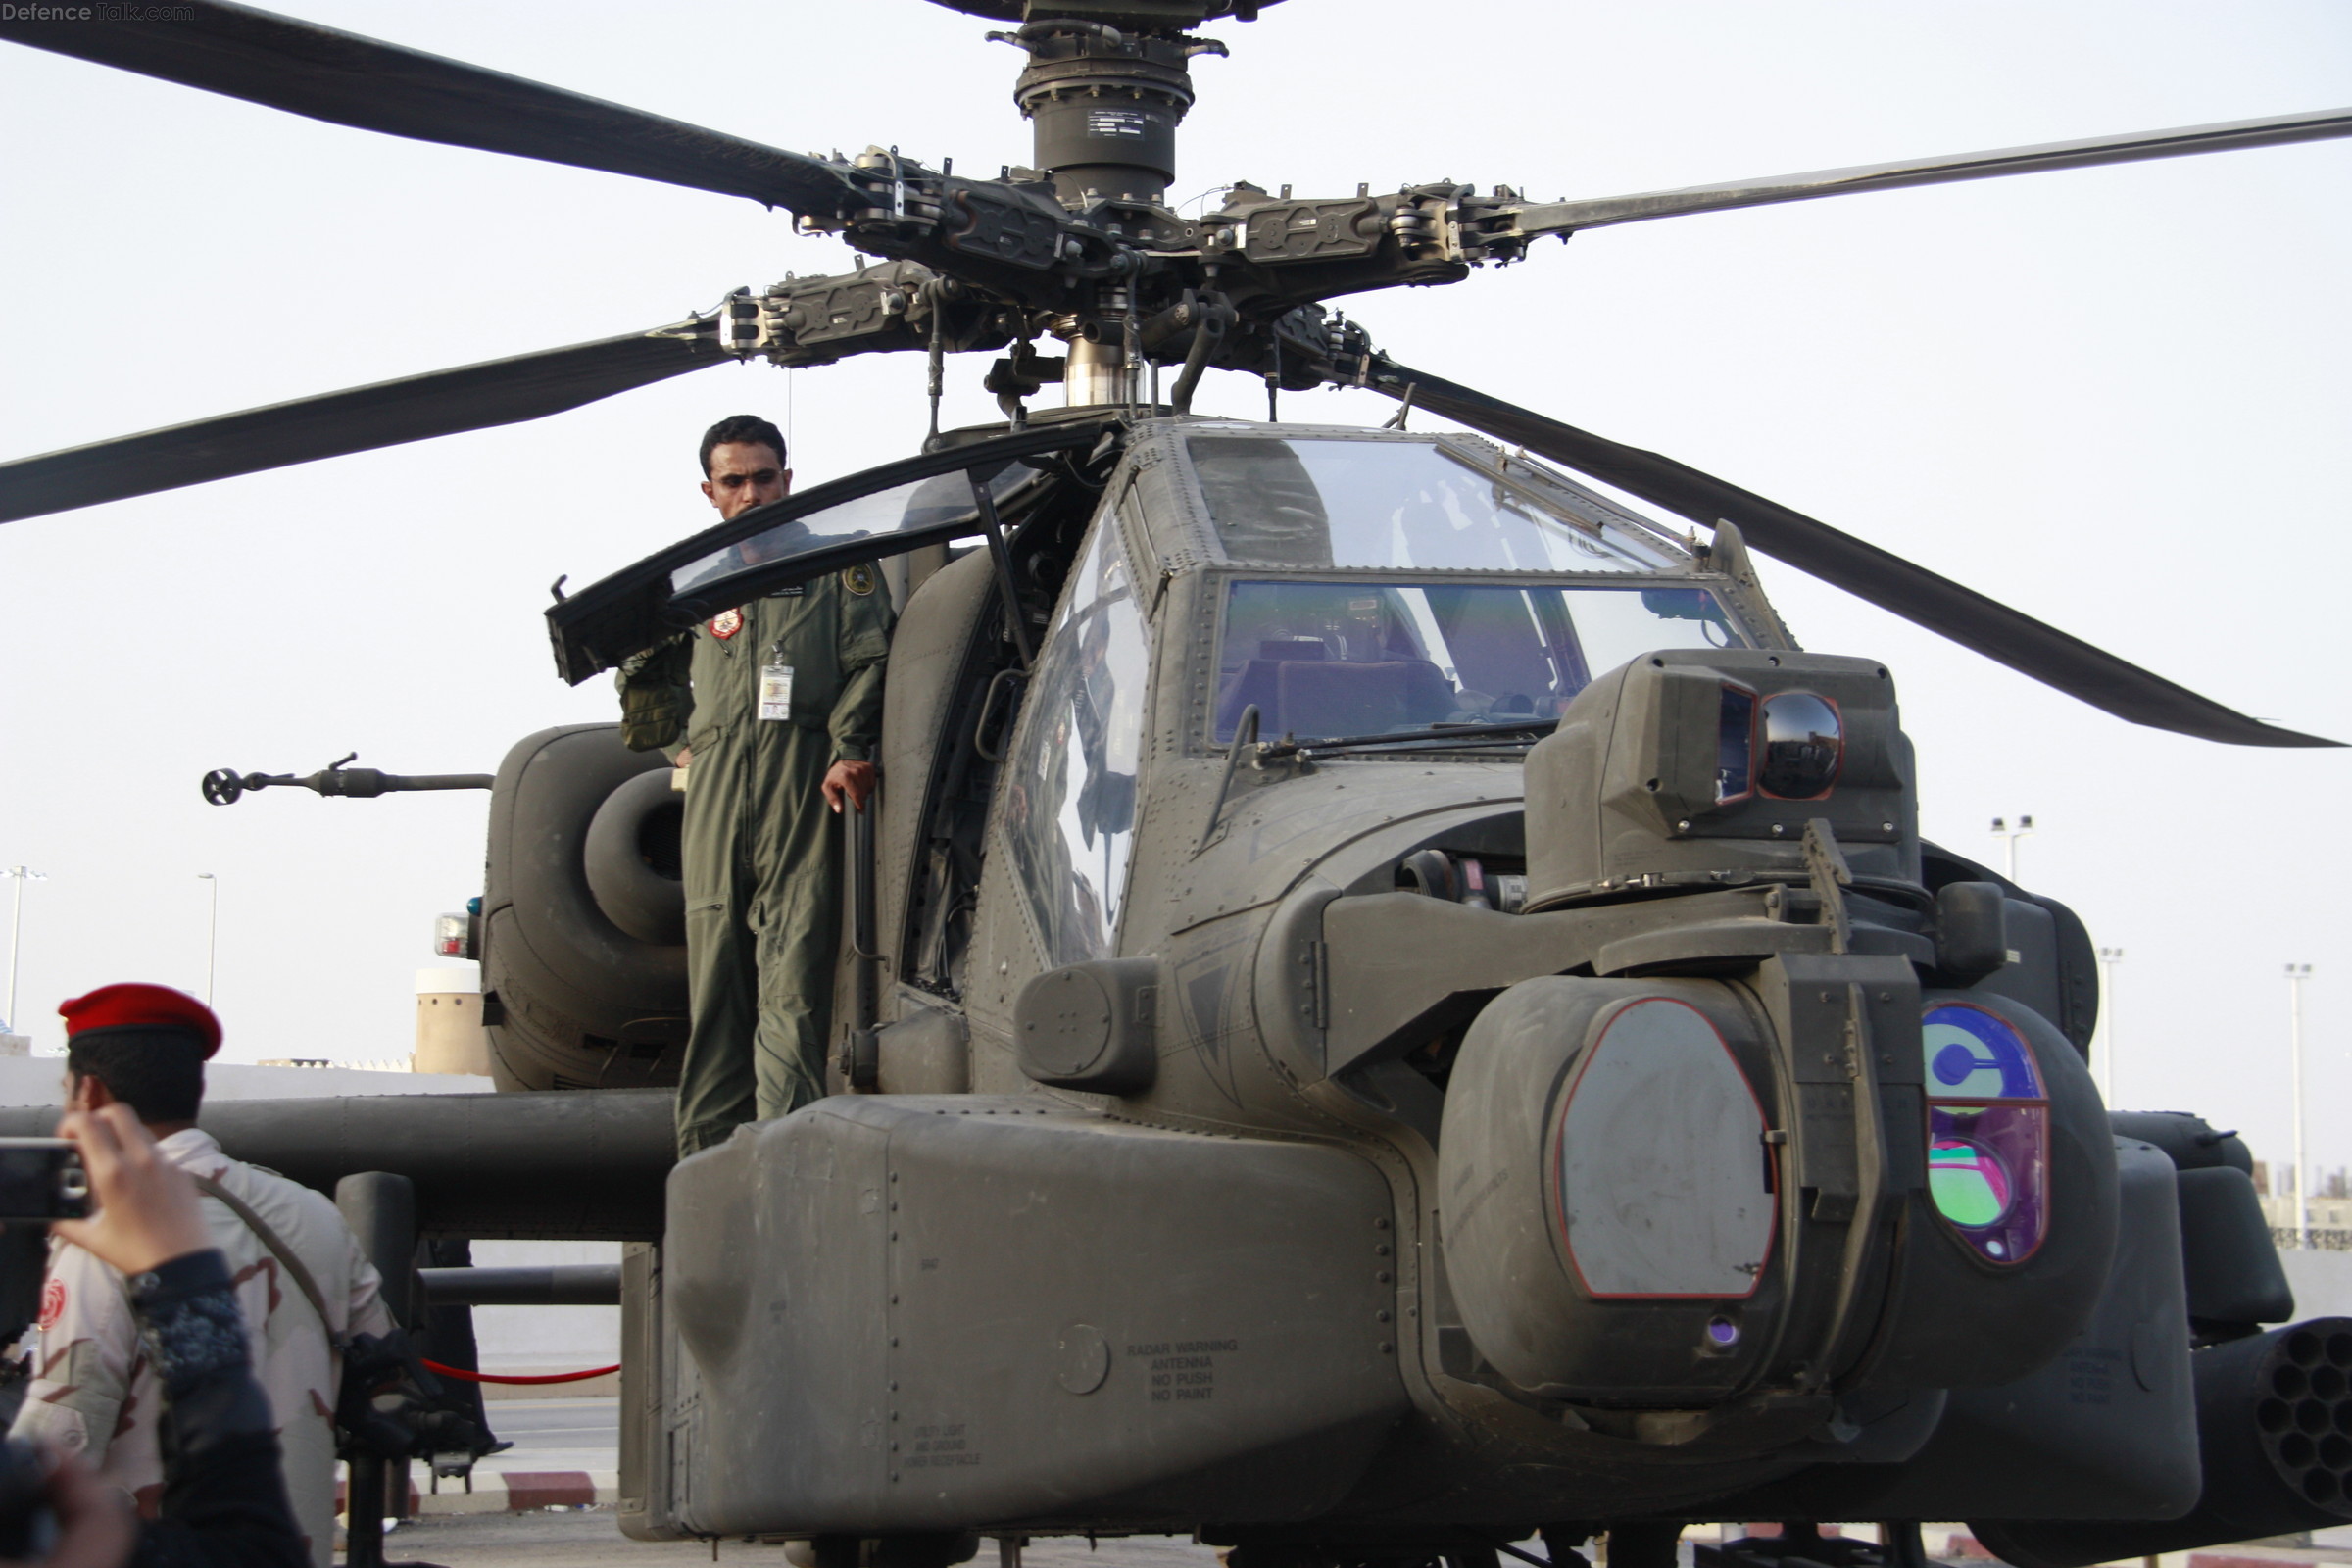 Saudi AH-64D